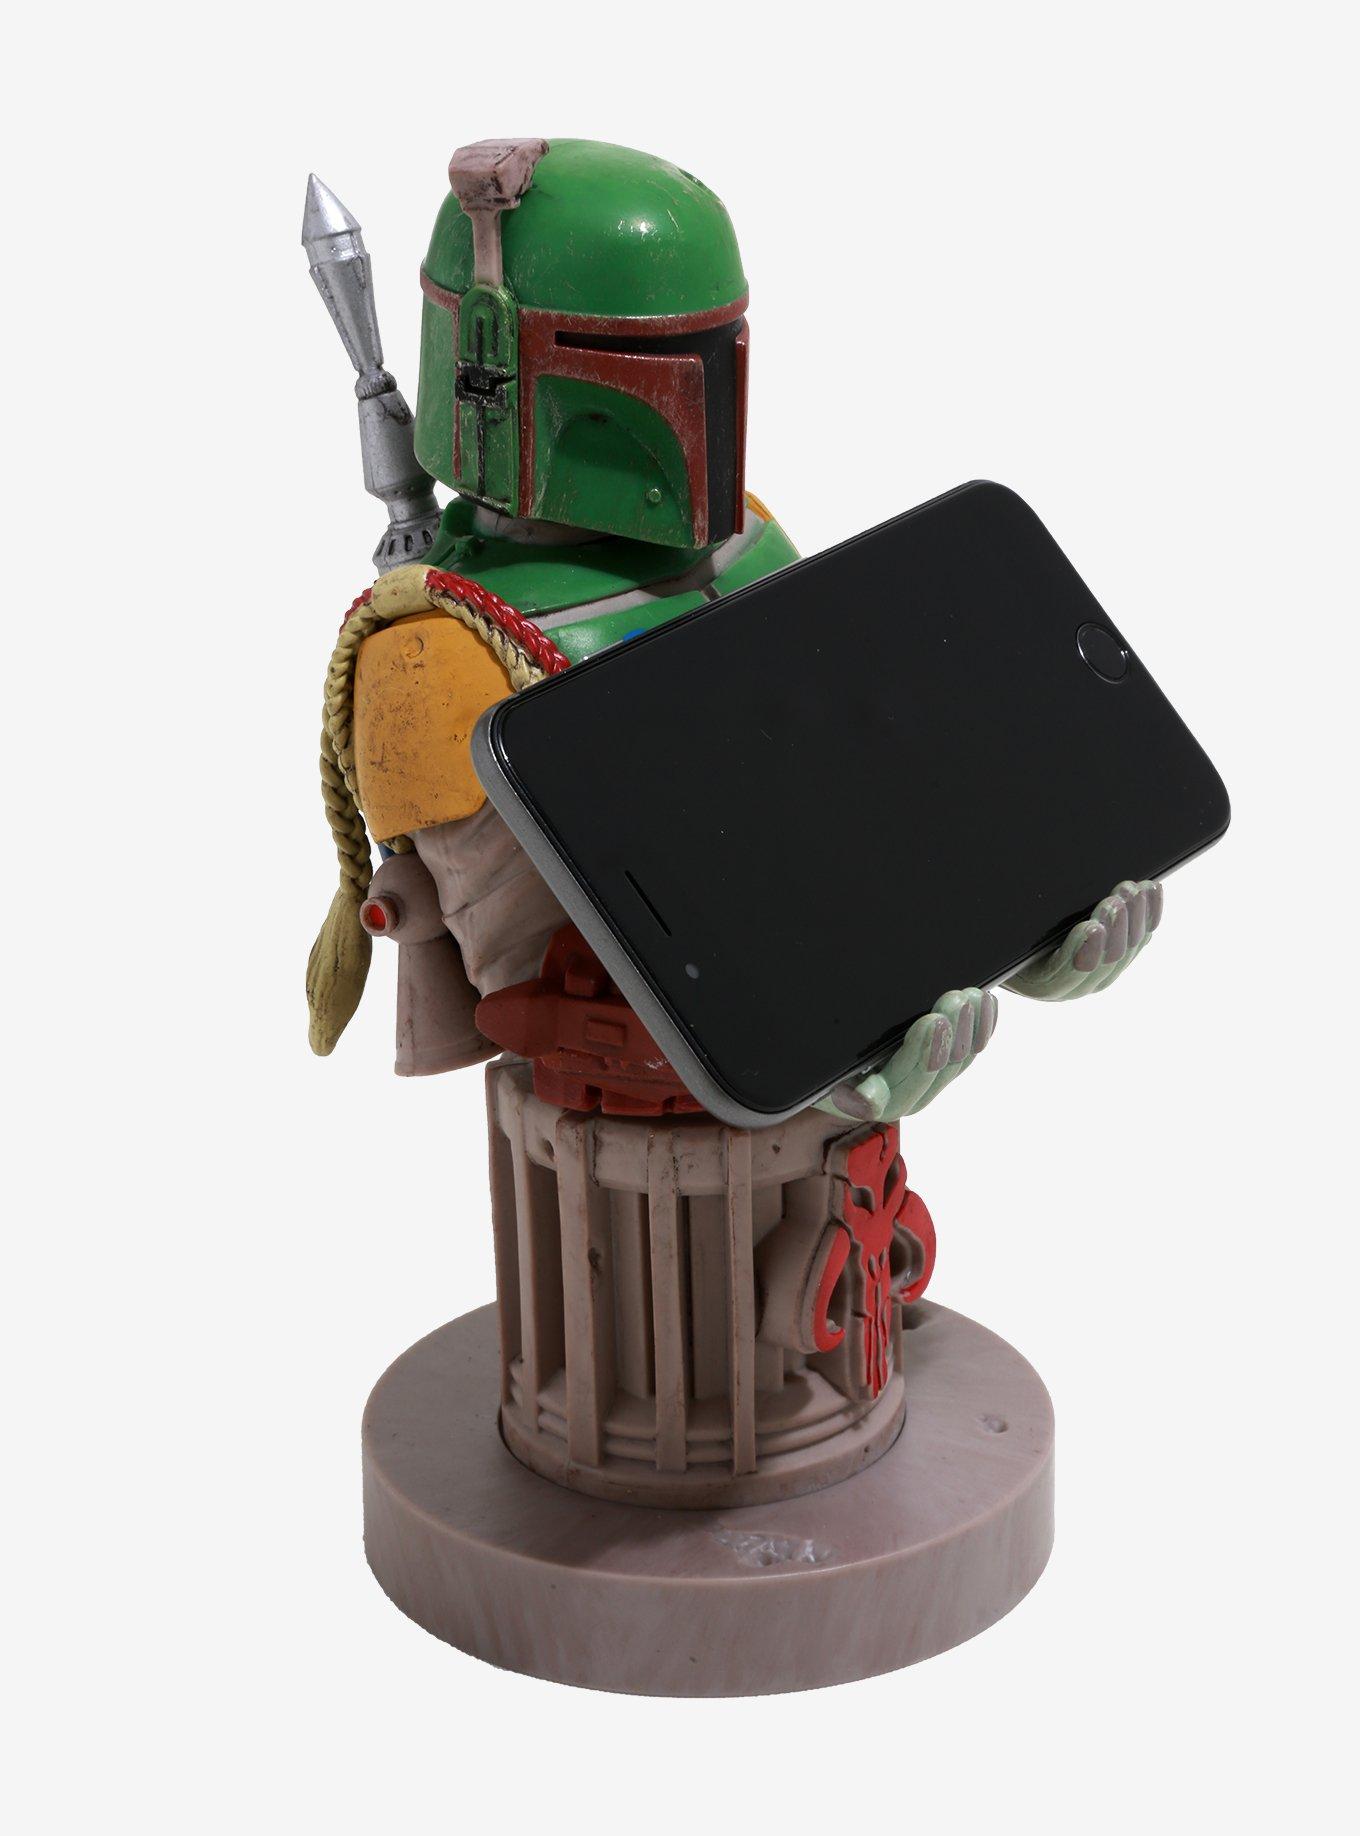 Figurine support téléphone / manette Star Wars Boba Fett Cable